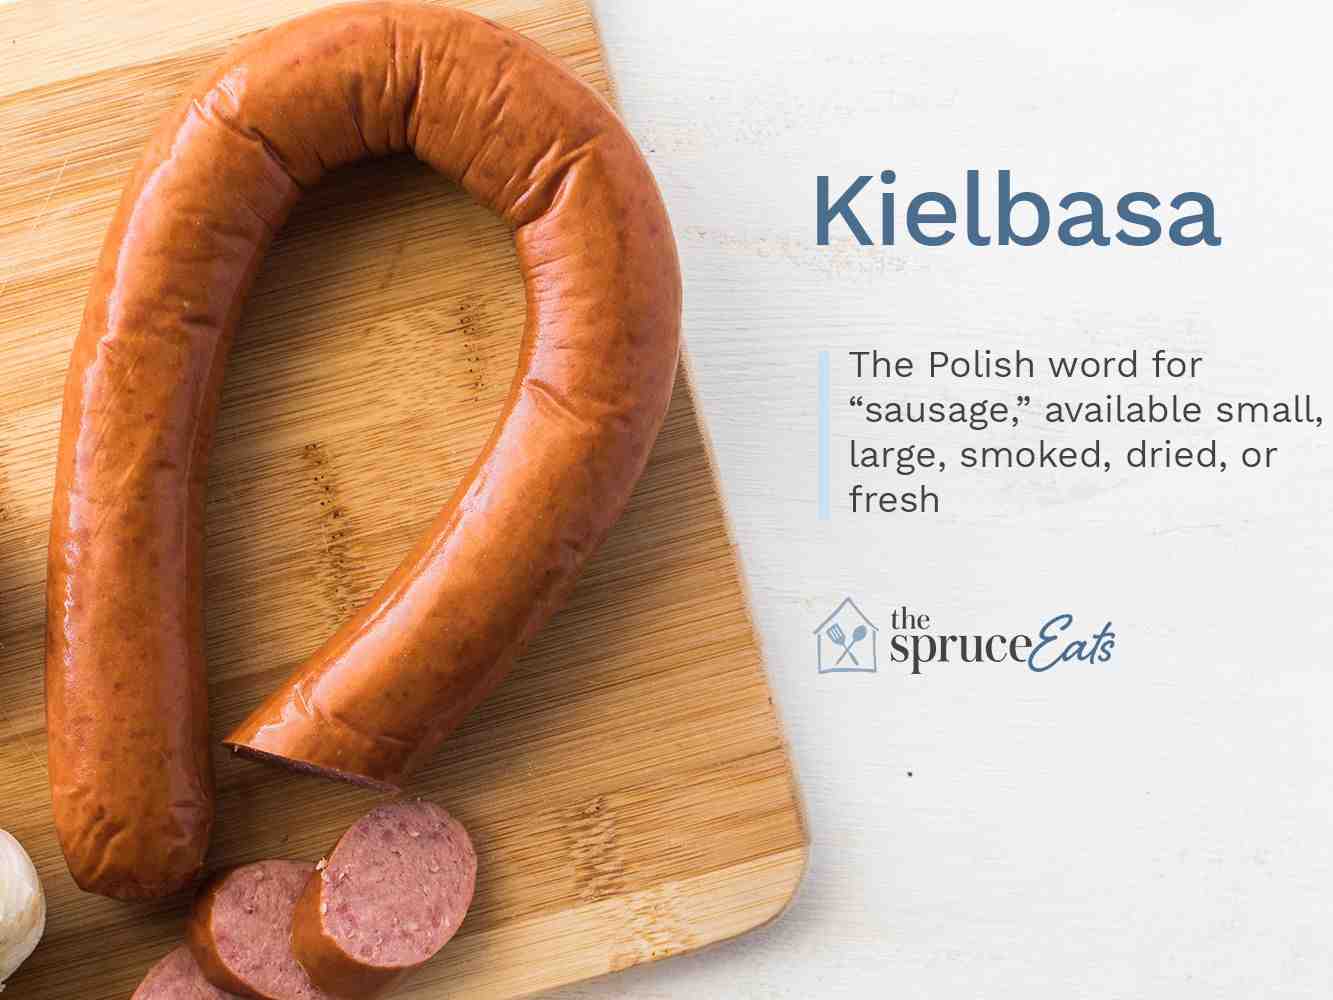 What's in Polish kielbasa?